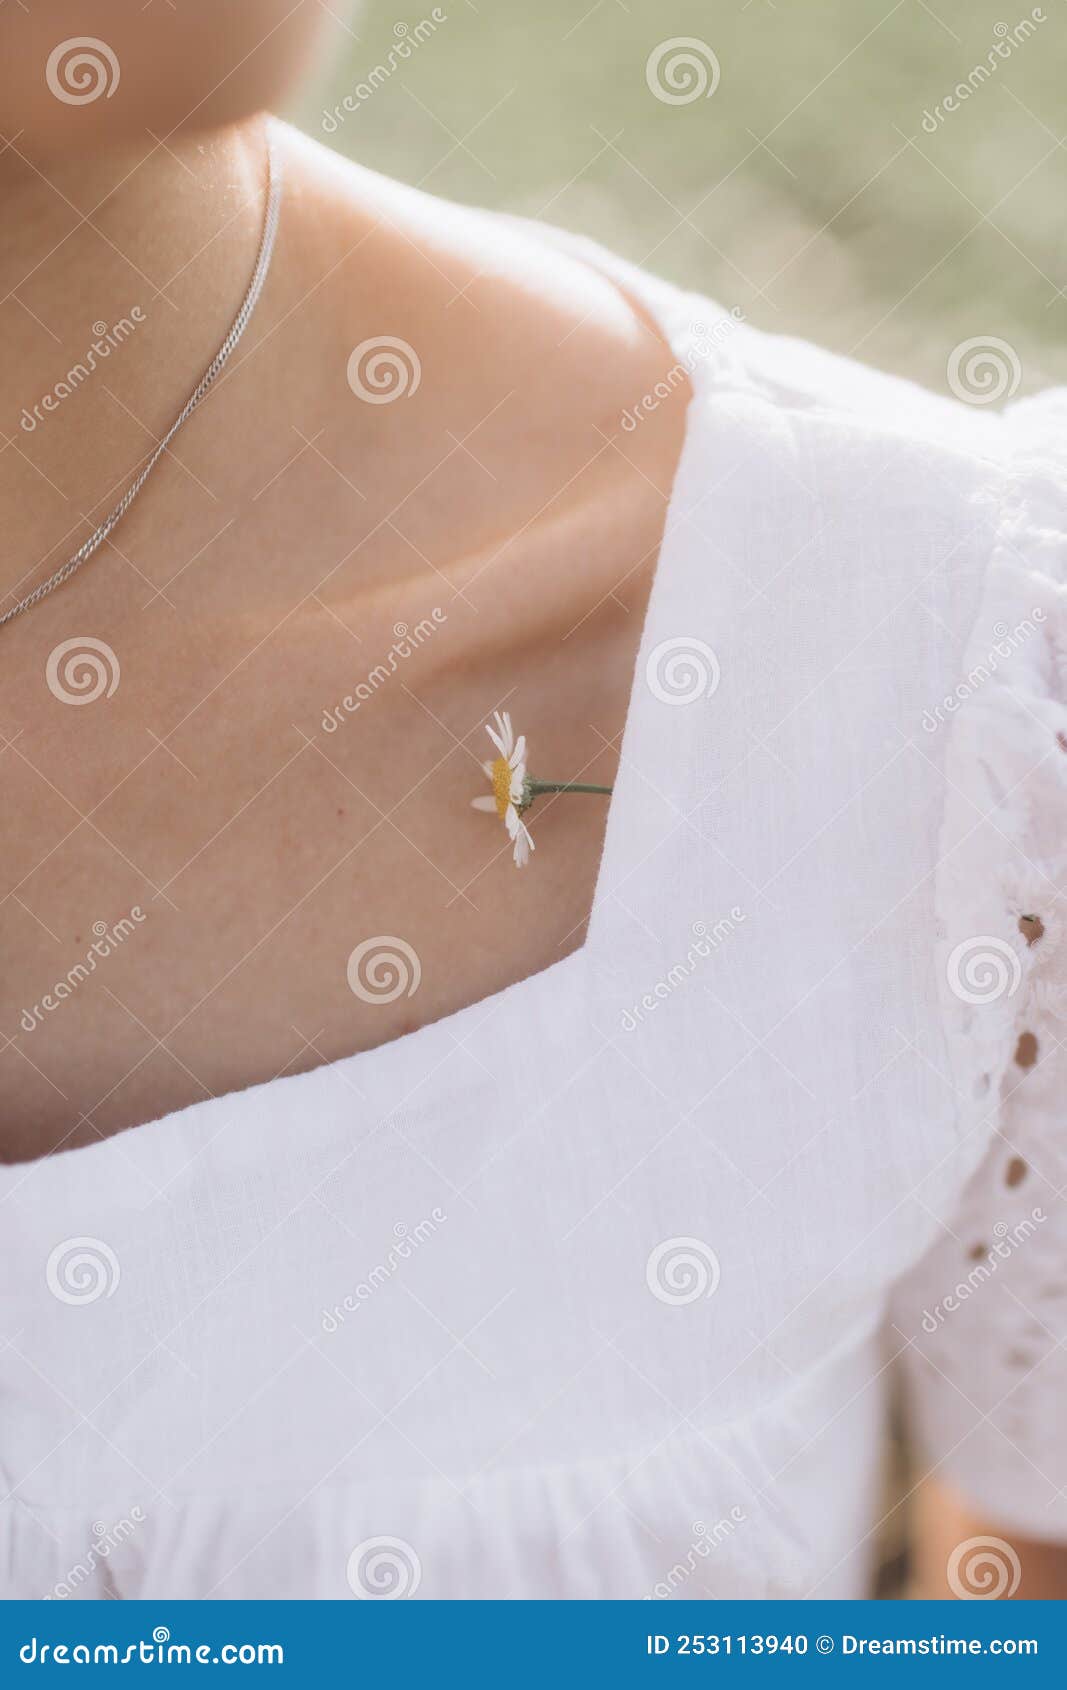 summer portrait. little chamomile flower on a young woman shoulder